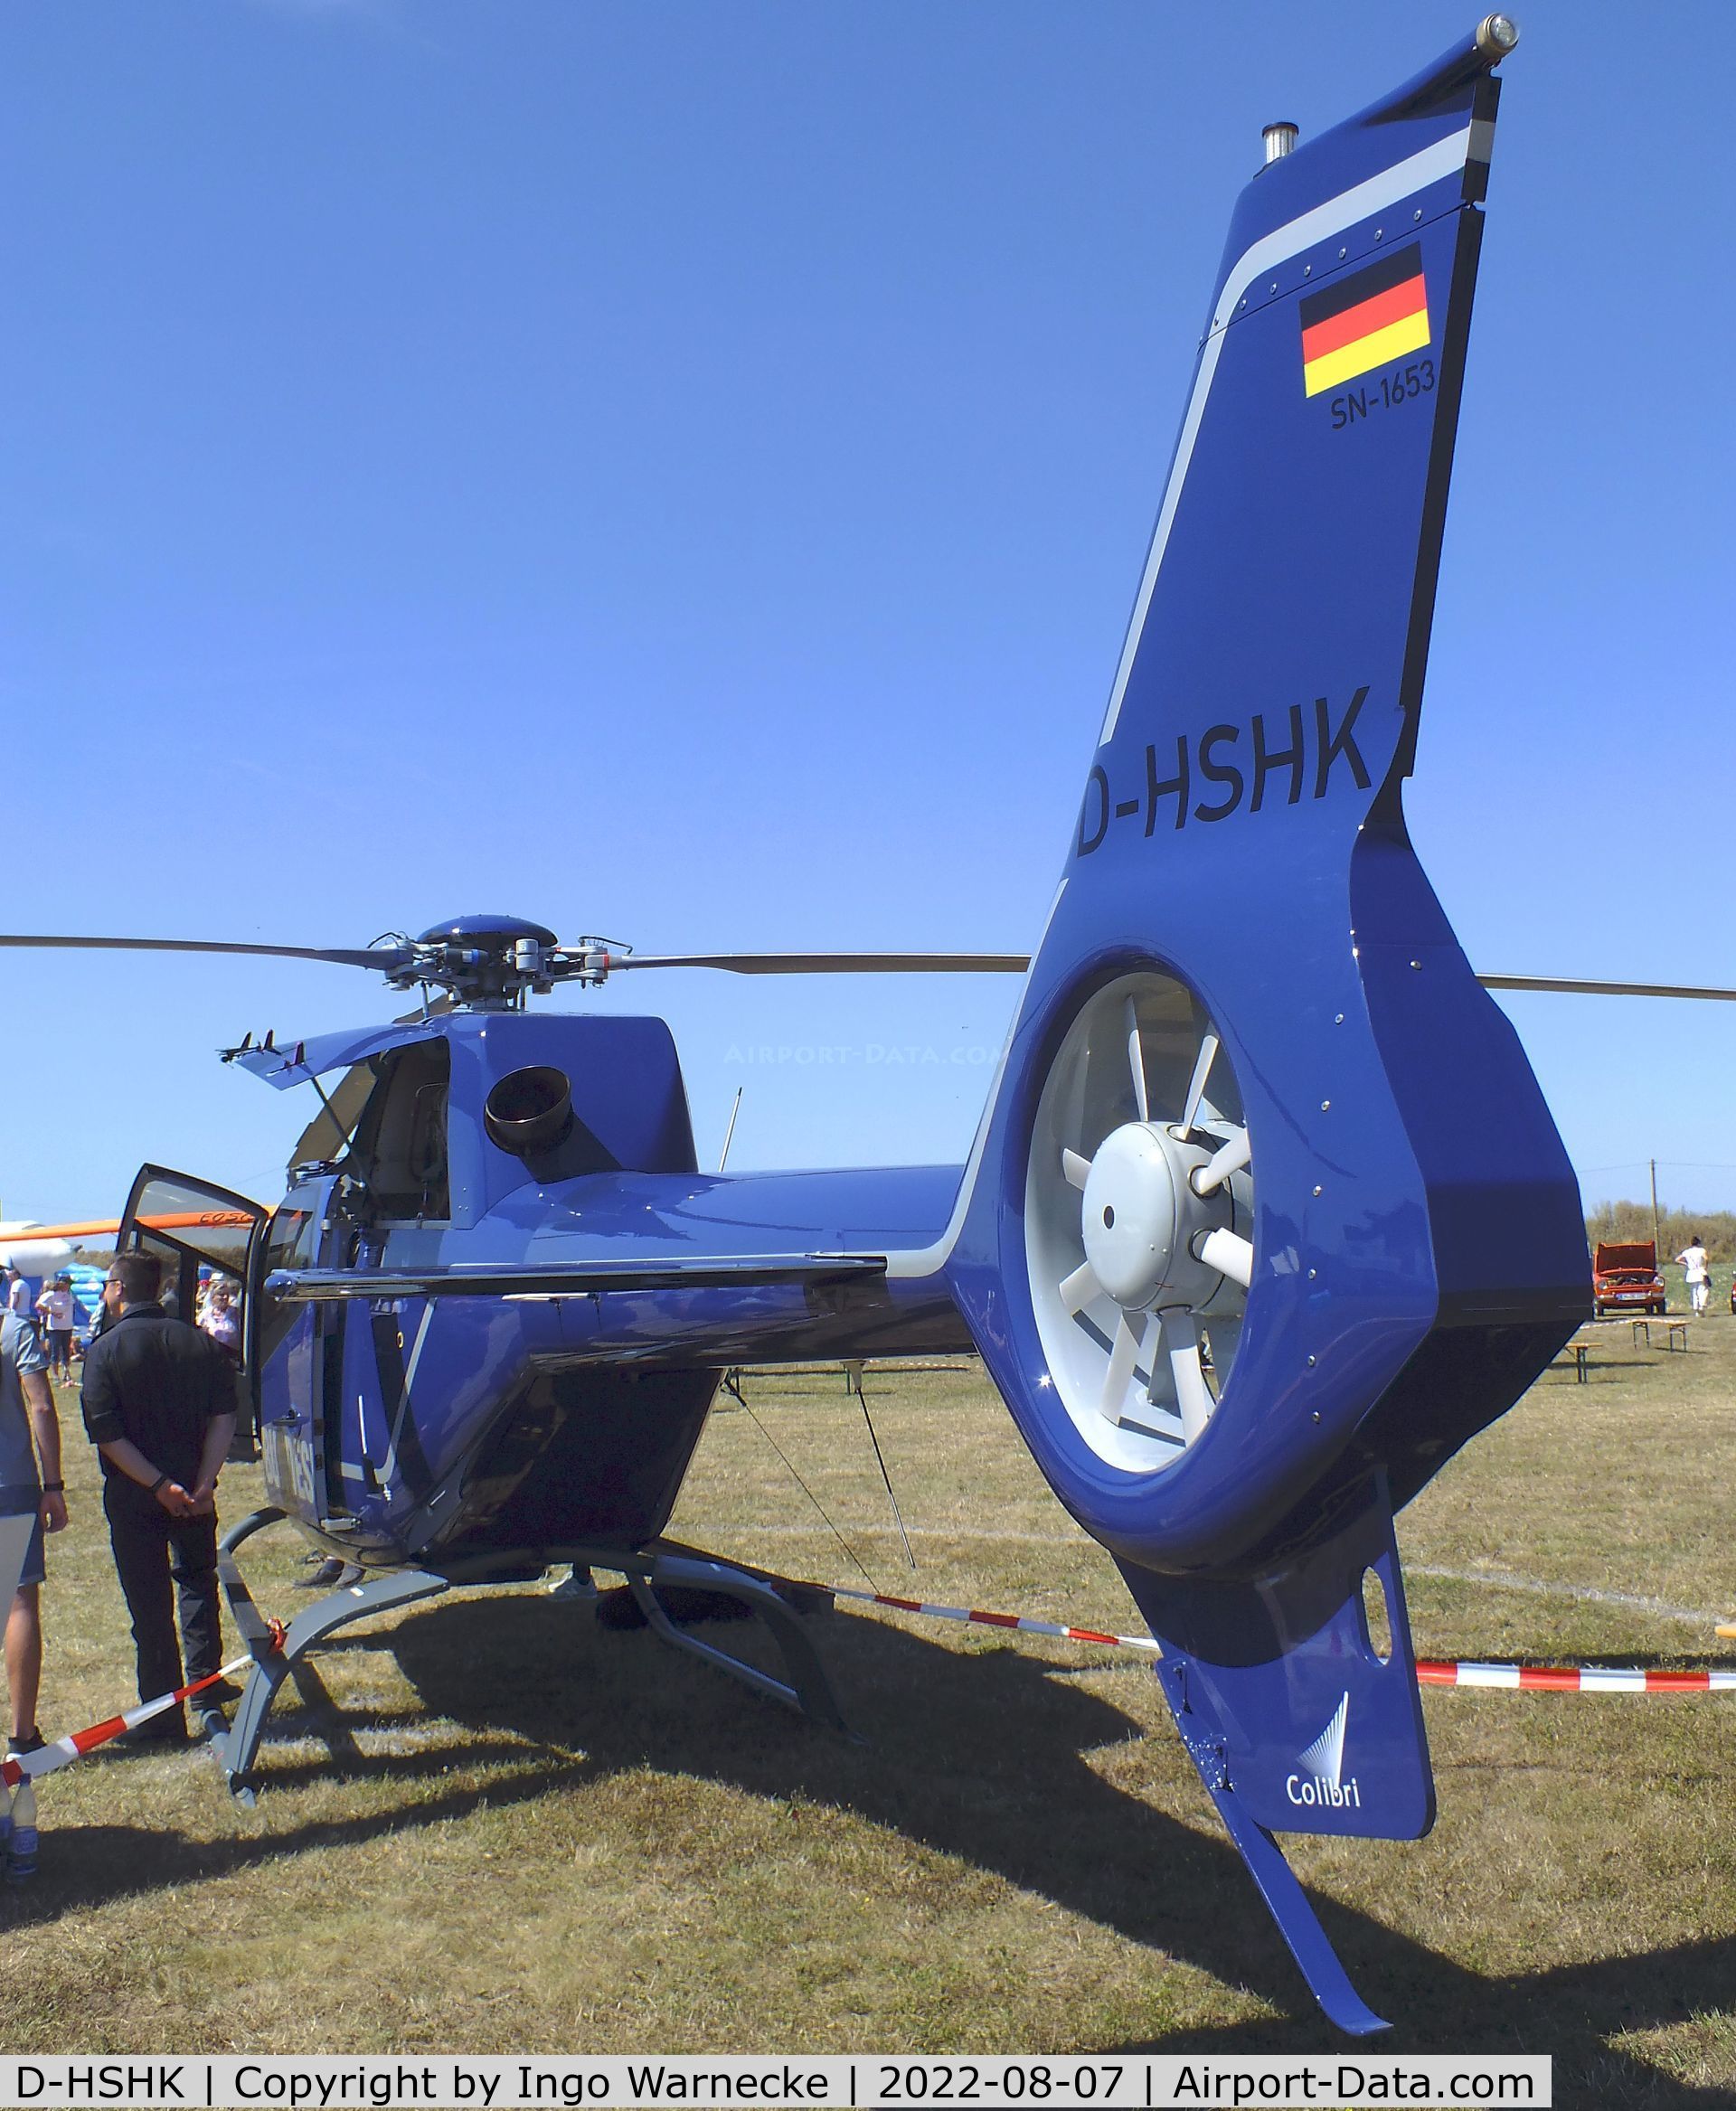 D-HSHK, 2010 Eurocopter EC-120B Colibri C/N 1653, Eurocopter EC120B Colibri of the Bundespolizei (german federal police) at the 2022 Flugplatz-Wiesenfest airfield display at Weilerswist-Müggenhausen ultralight airfield